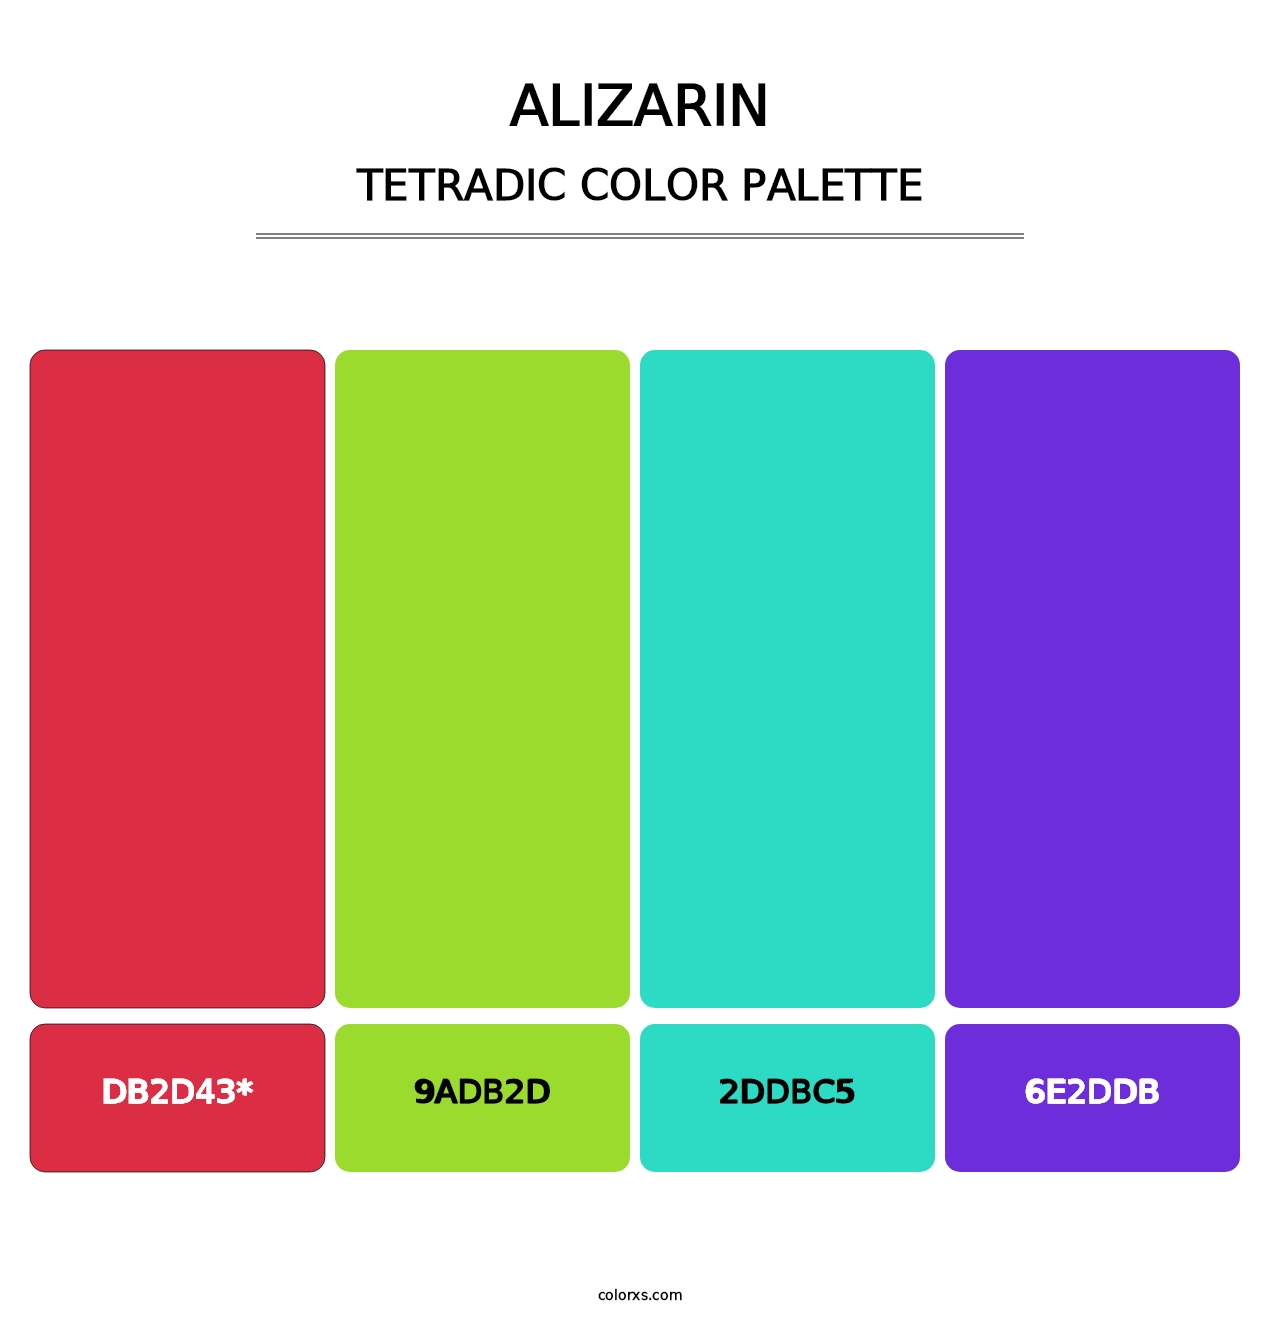 Alizarin - Tetradic Color Palette